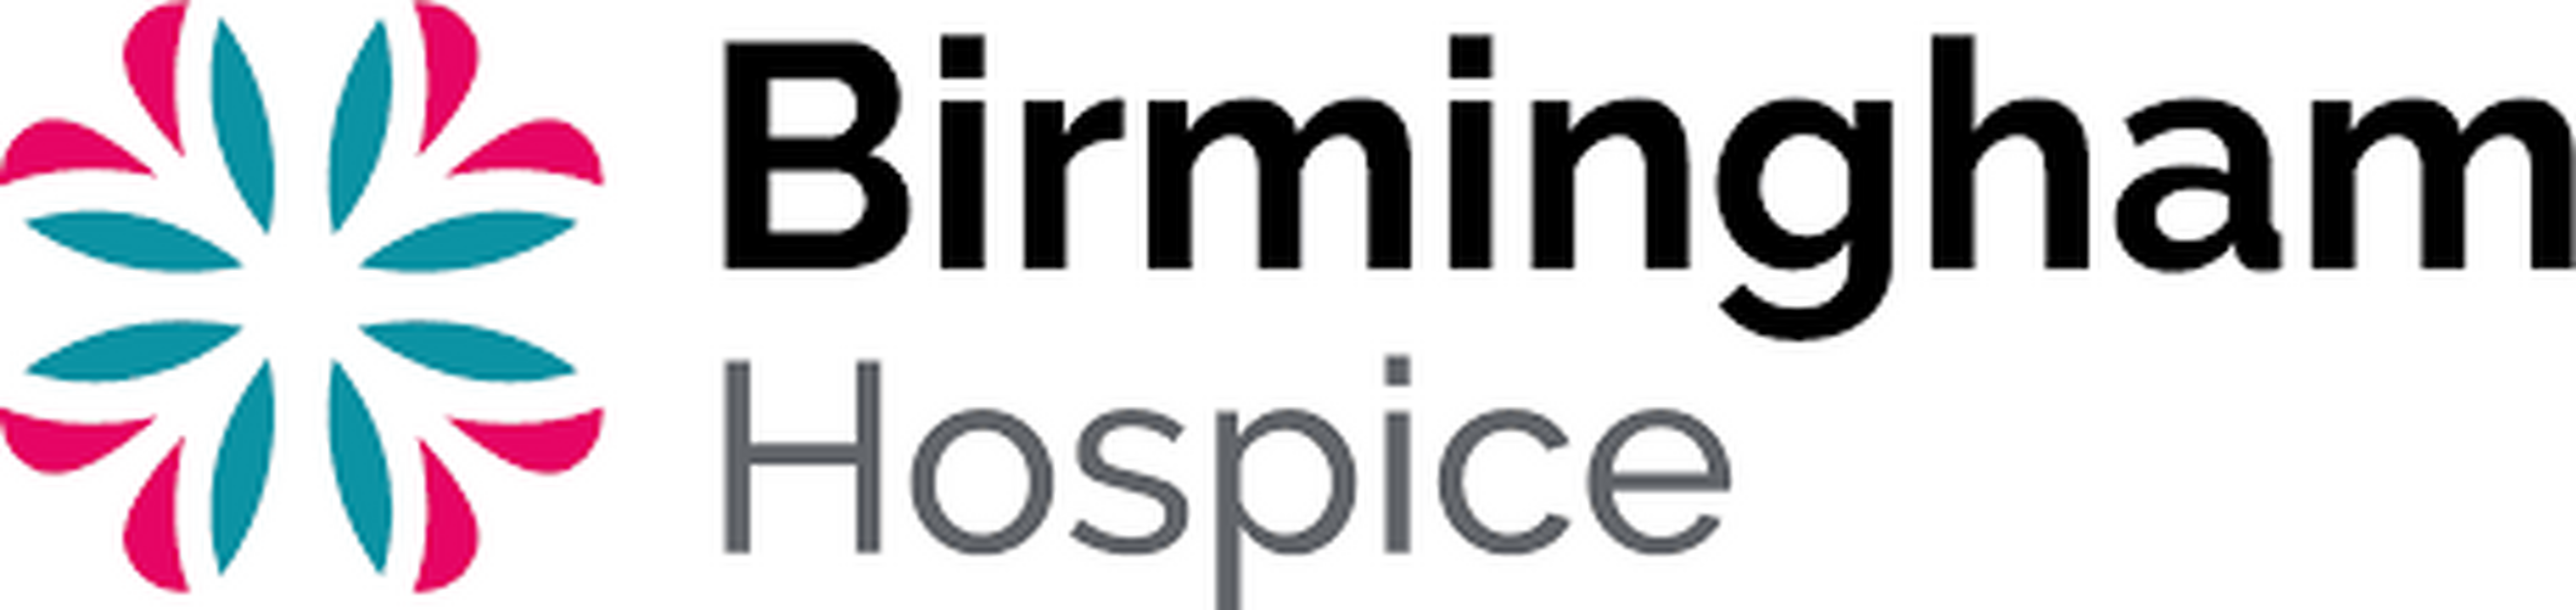 Volunteering Opportunity with Birmingham Hospice